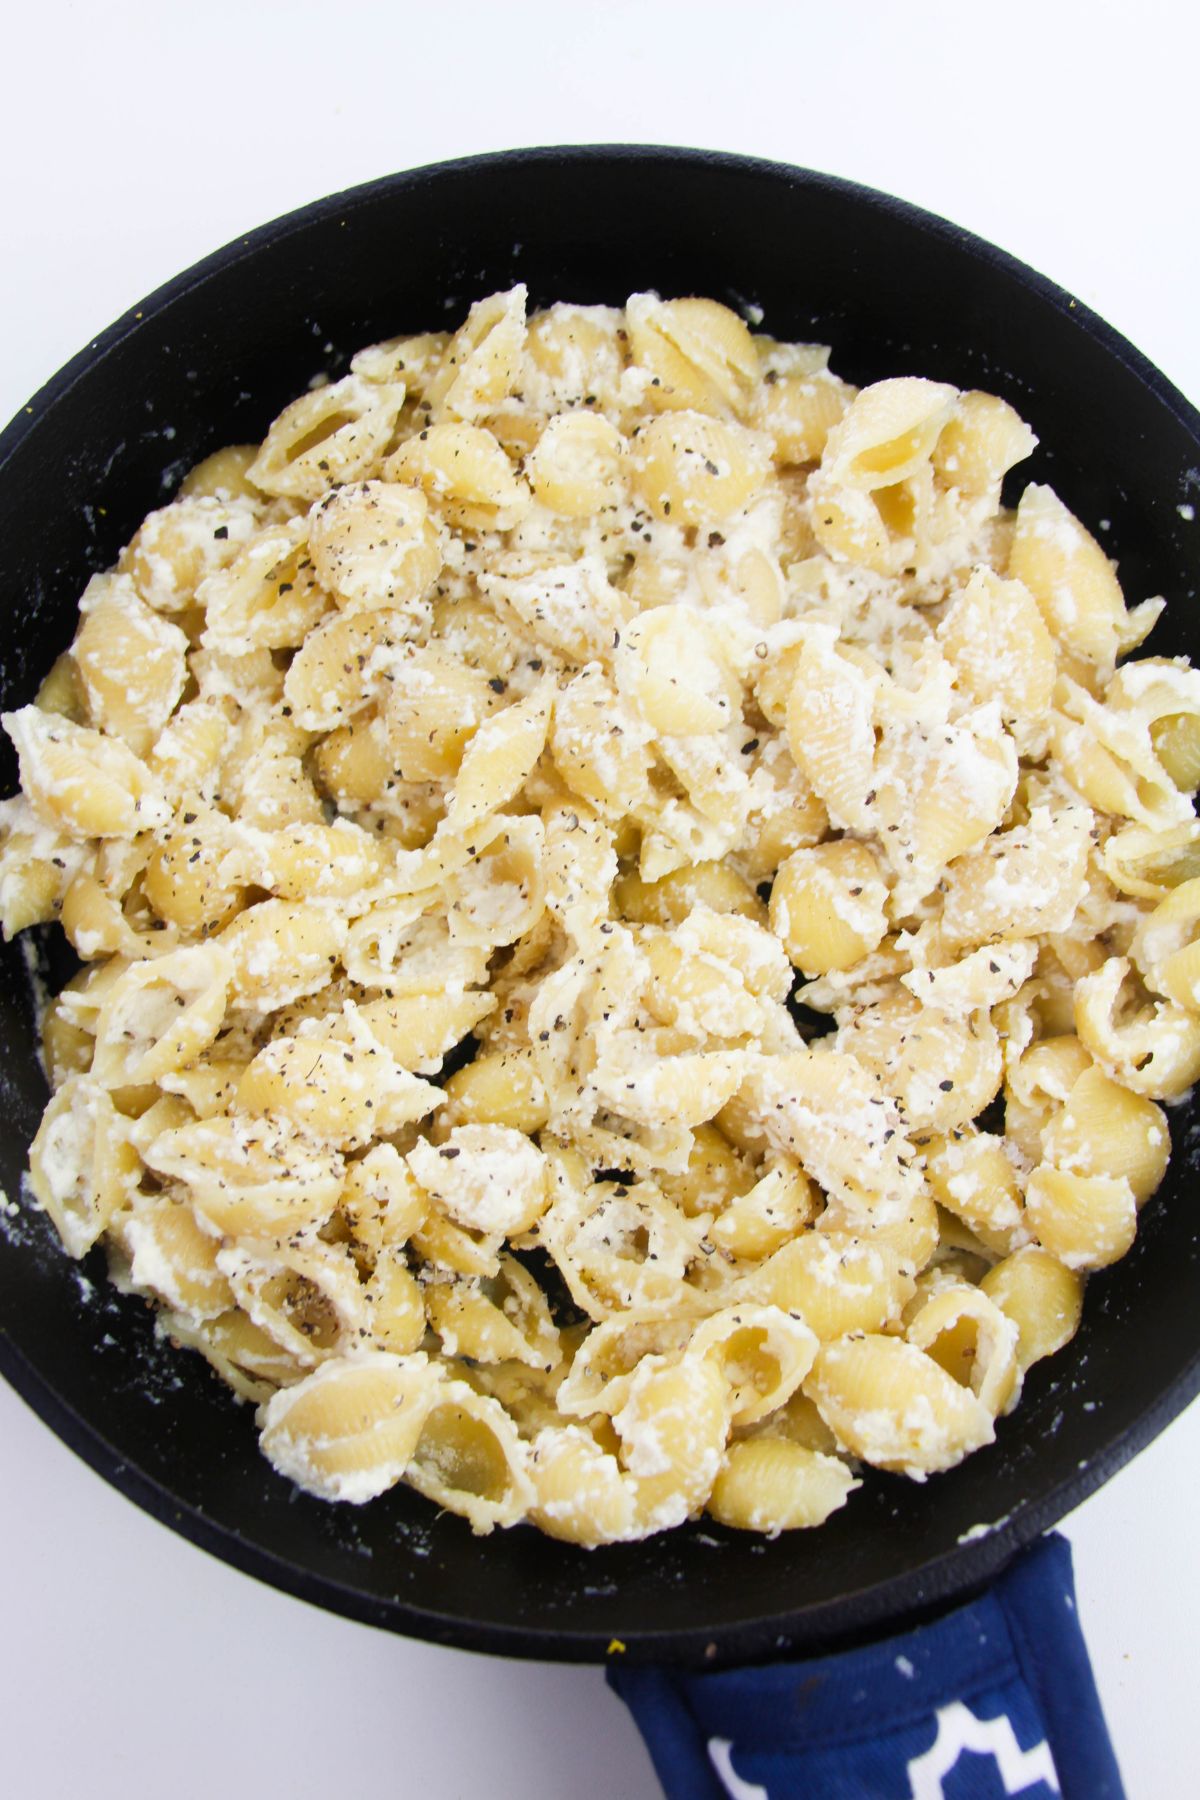  Parmesan cheese, lemon zest, salt, pepper, and pasta in a skillet